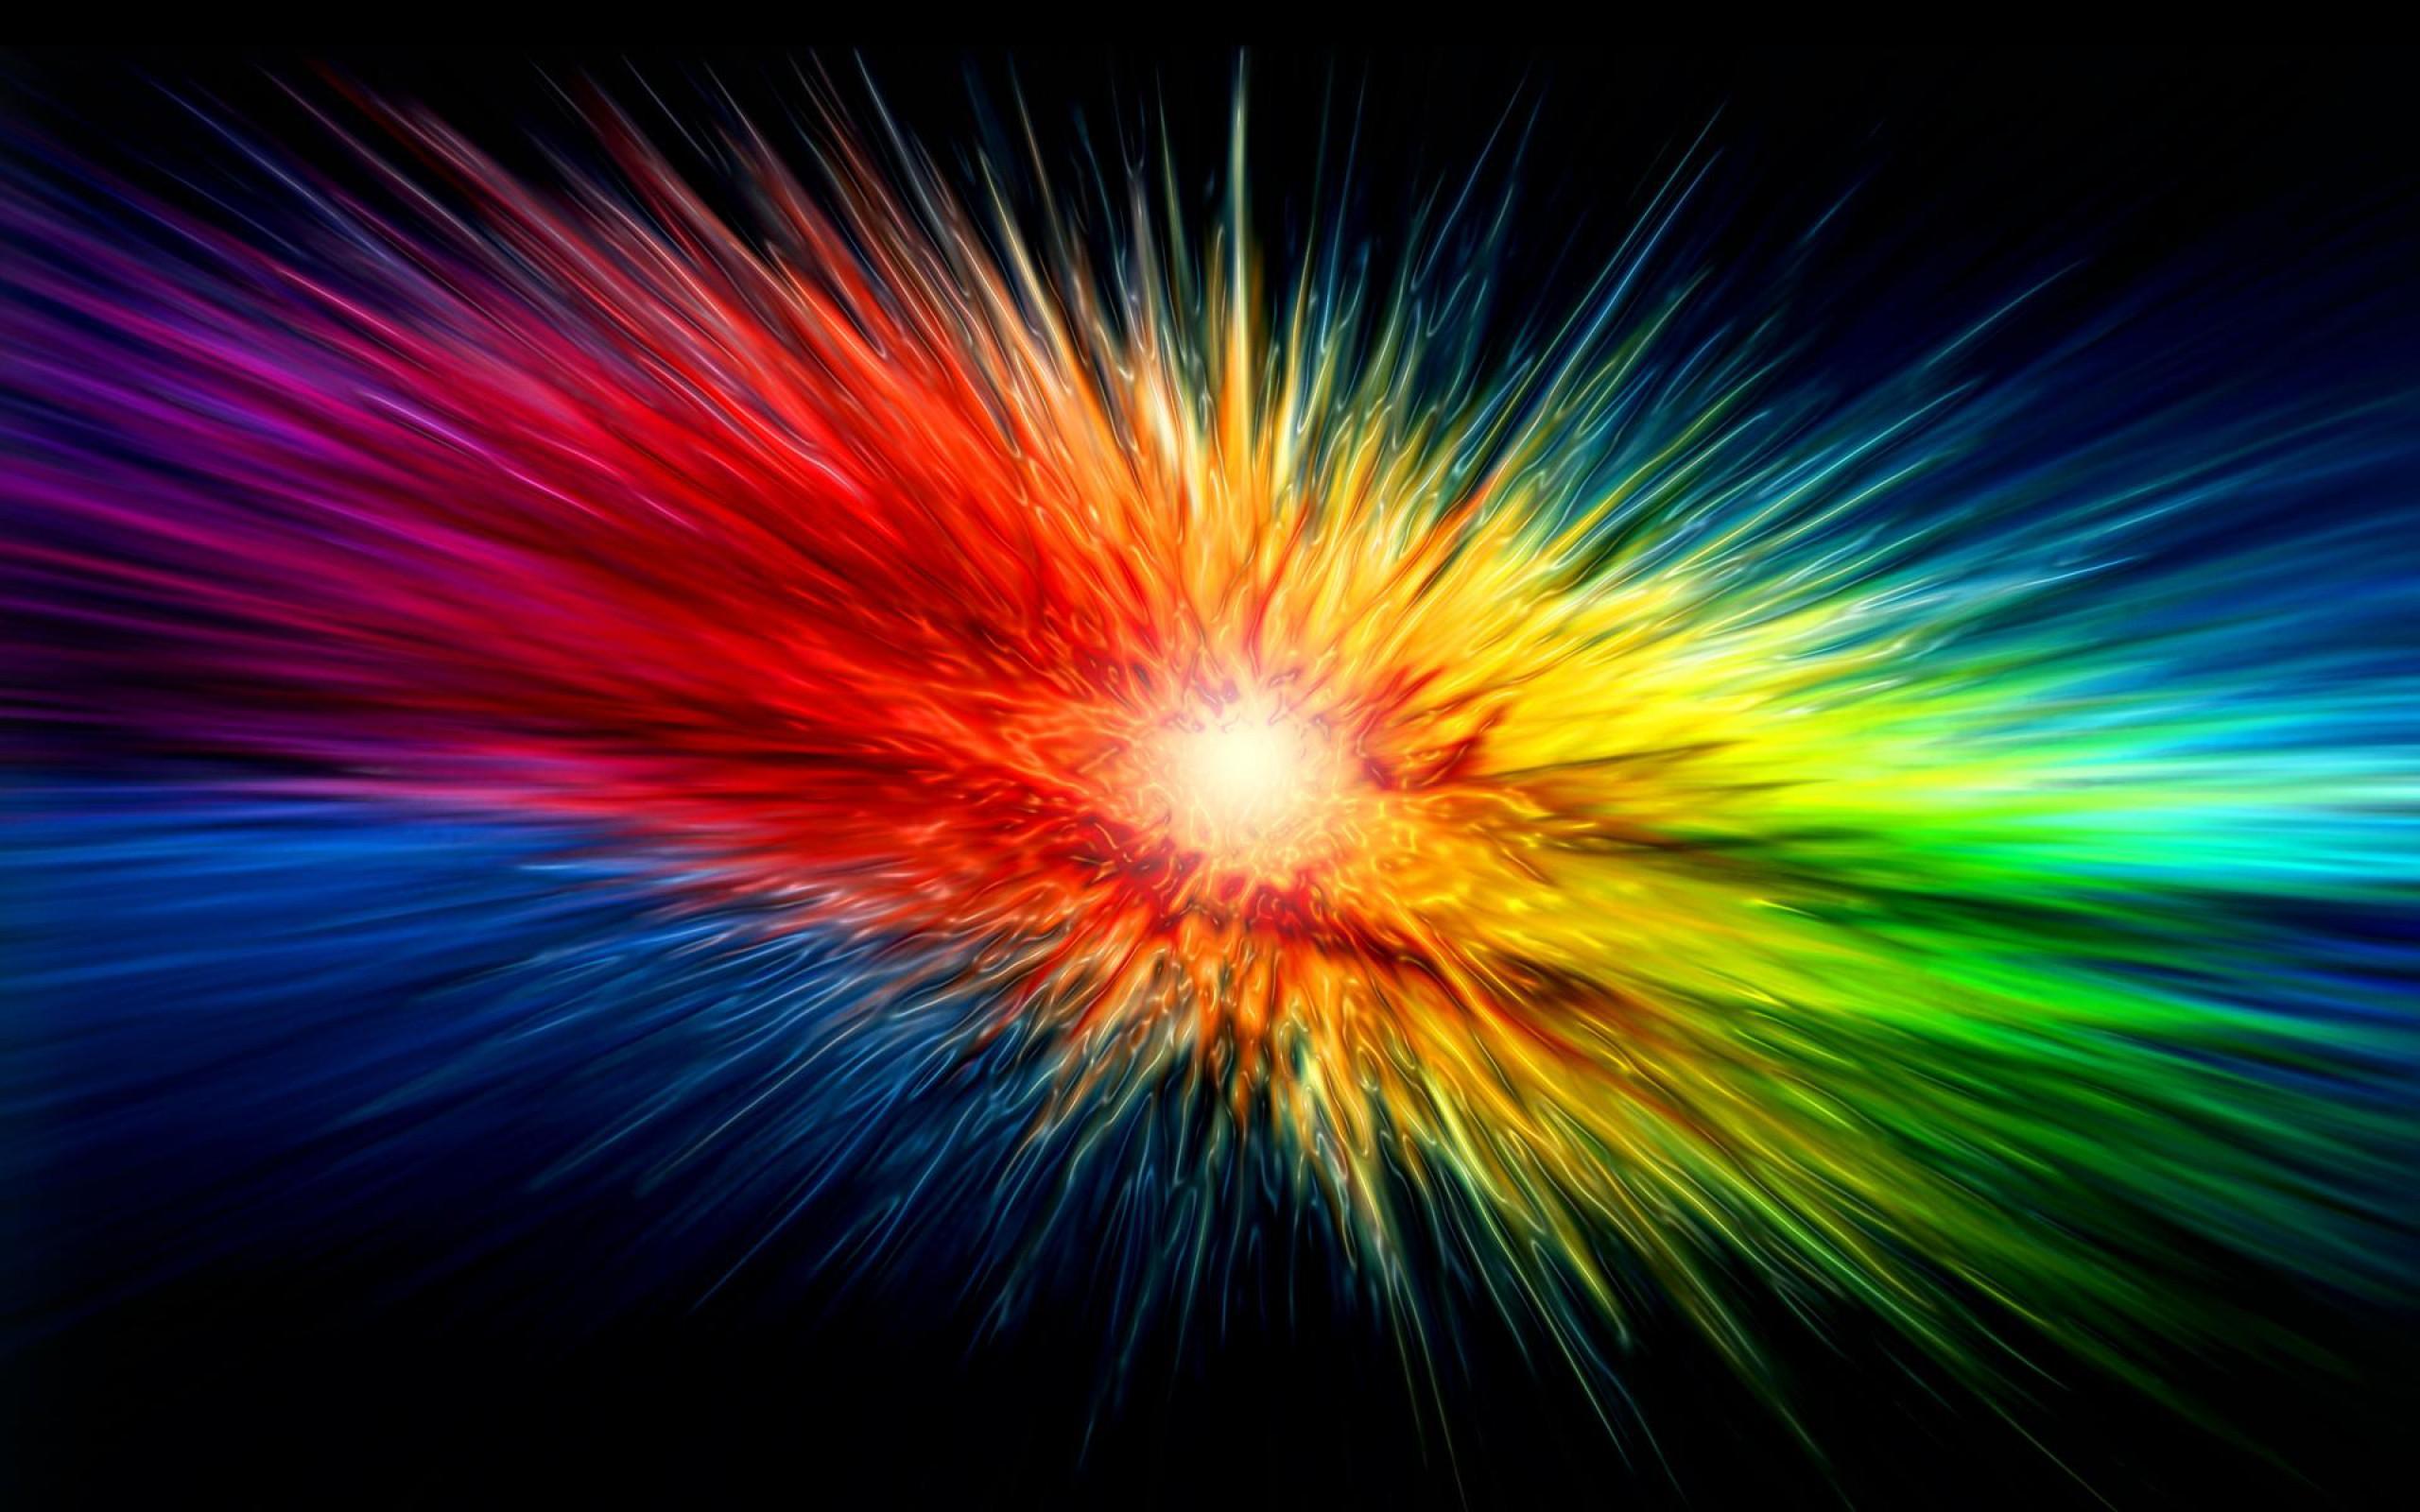 color explosion